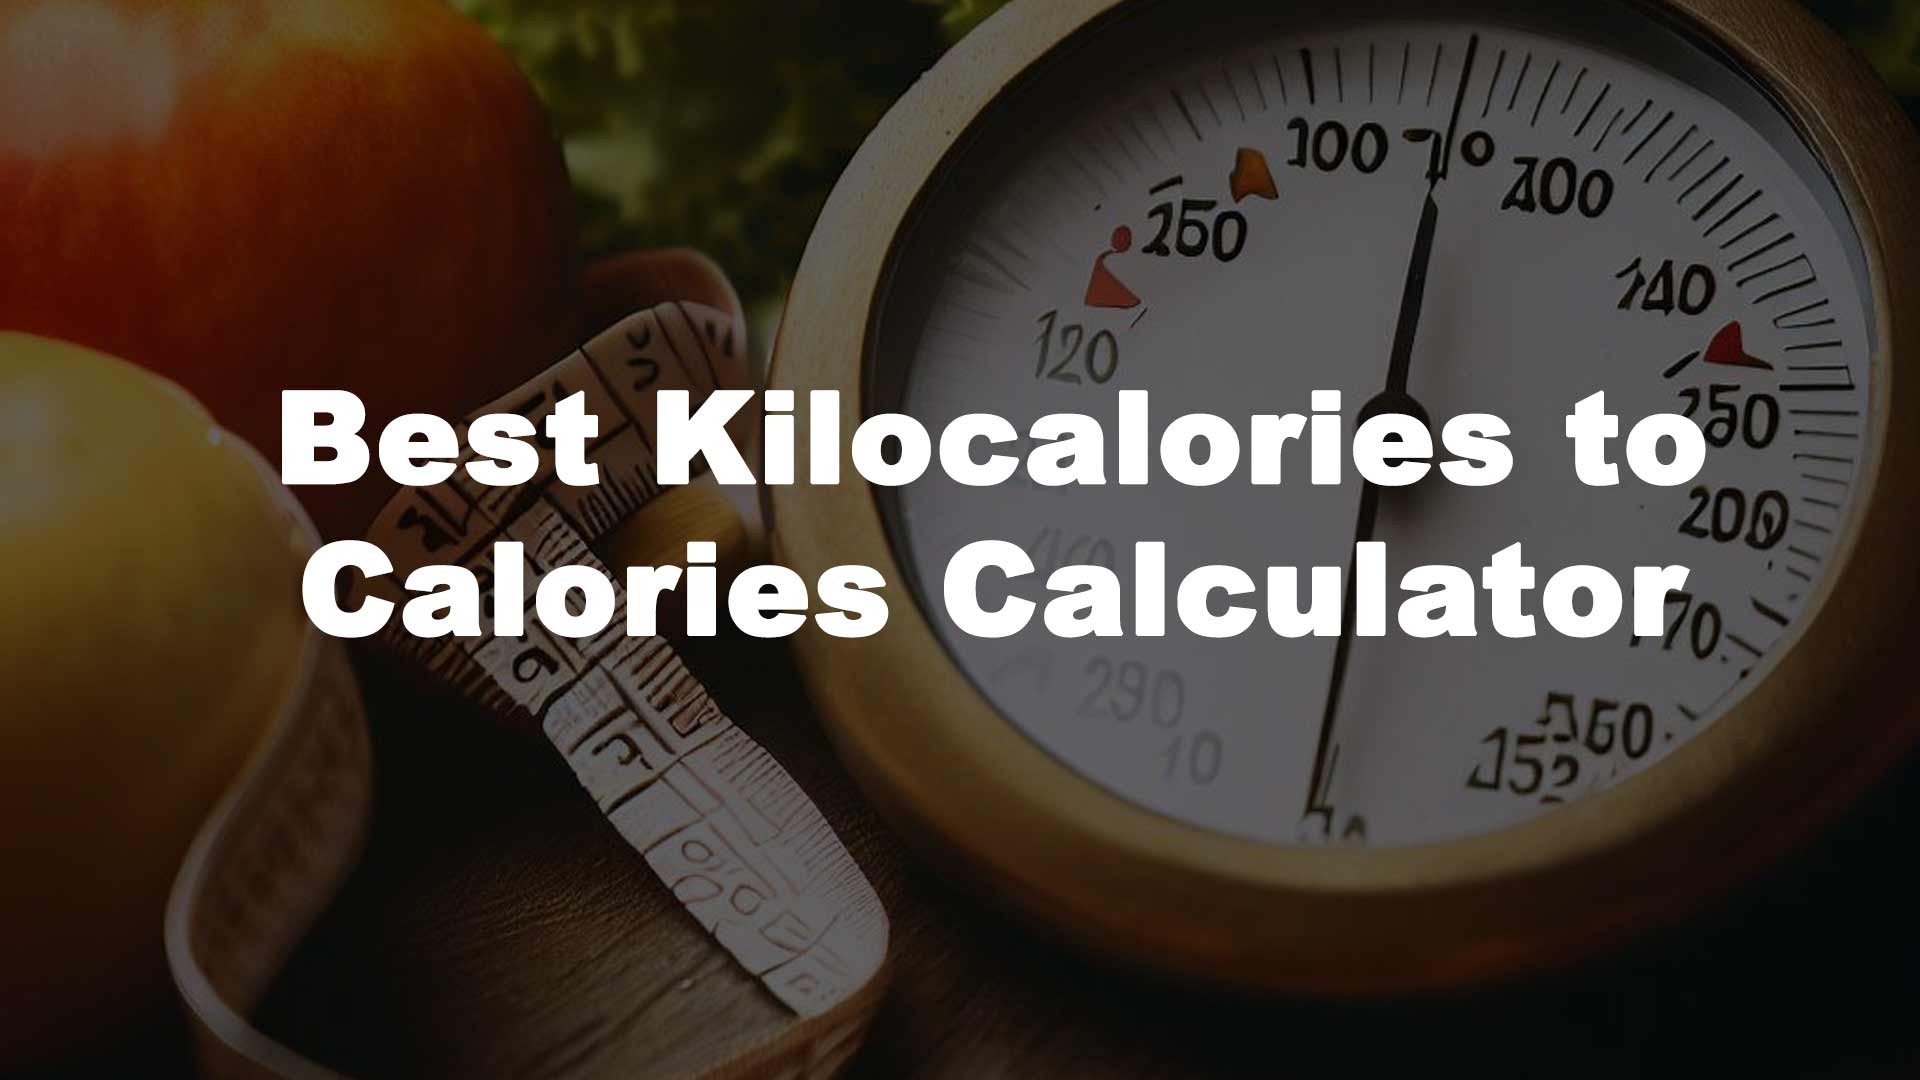 Best Kilocalories to Calories Calculator - Kcal to Cal Conversion